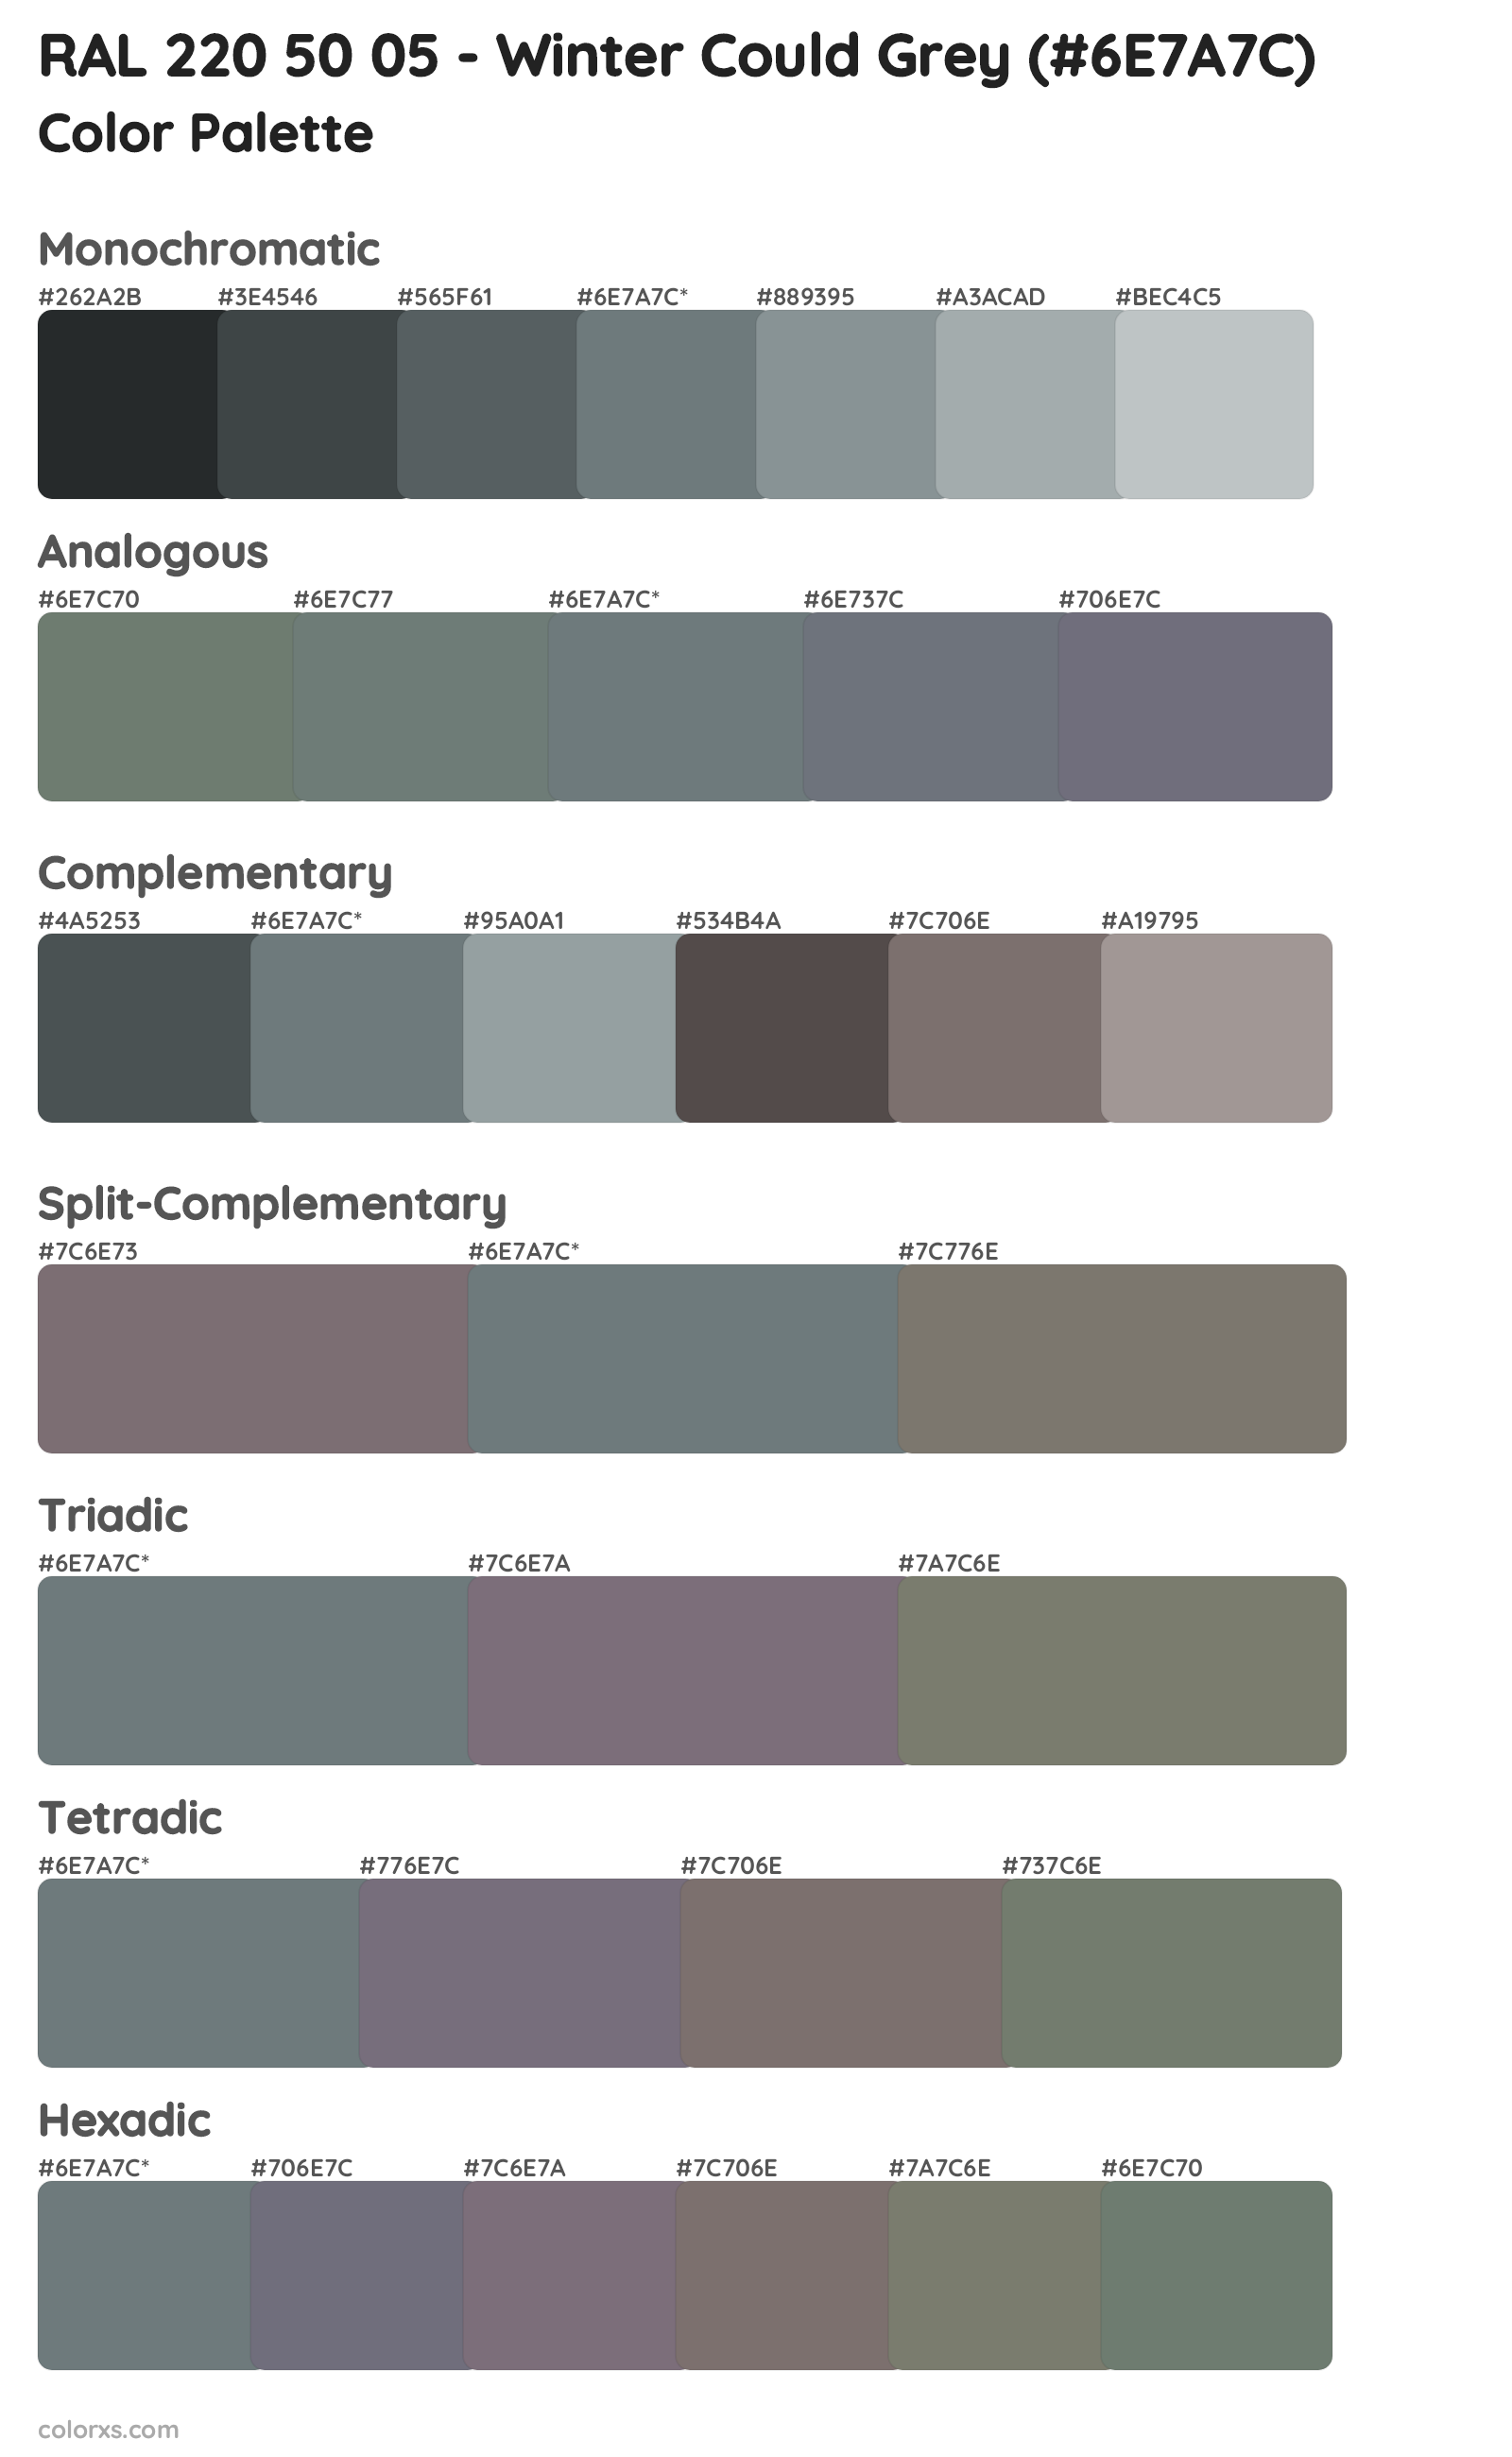 RAL 220 50 05 - Winter Could Grey Color Scheme Palettes